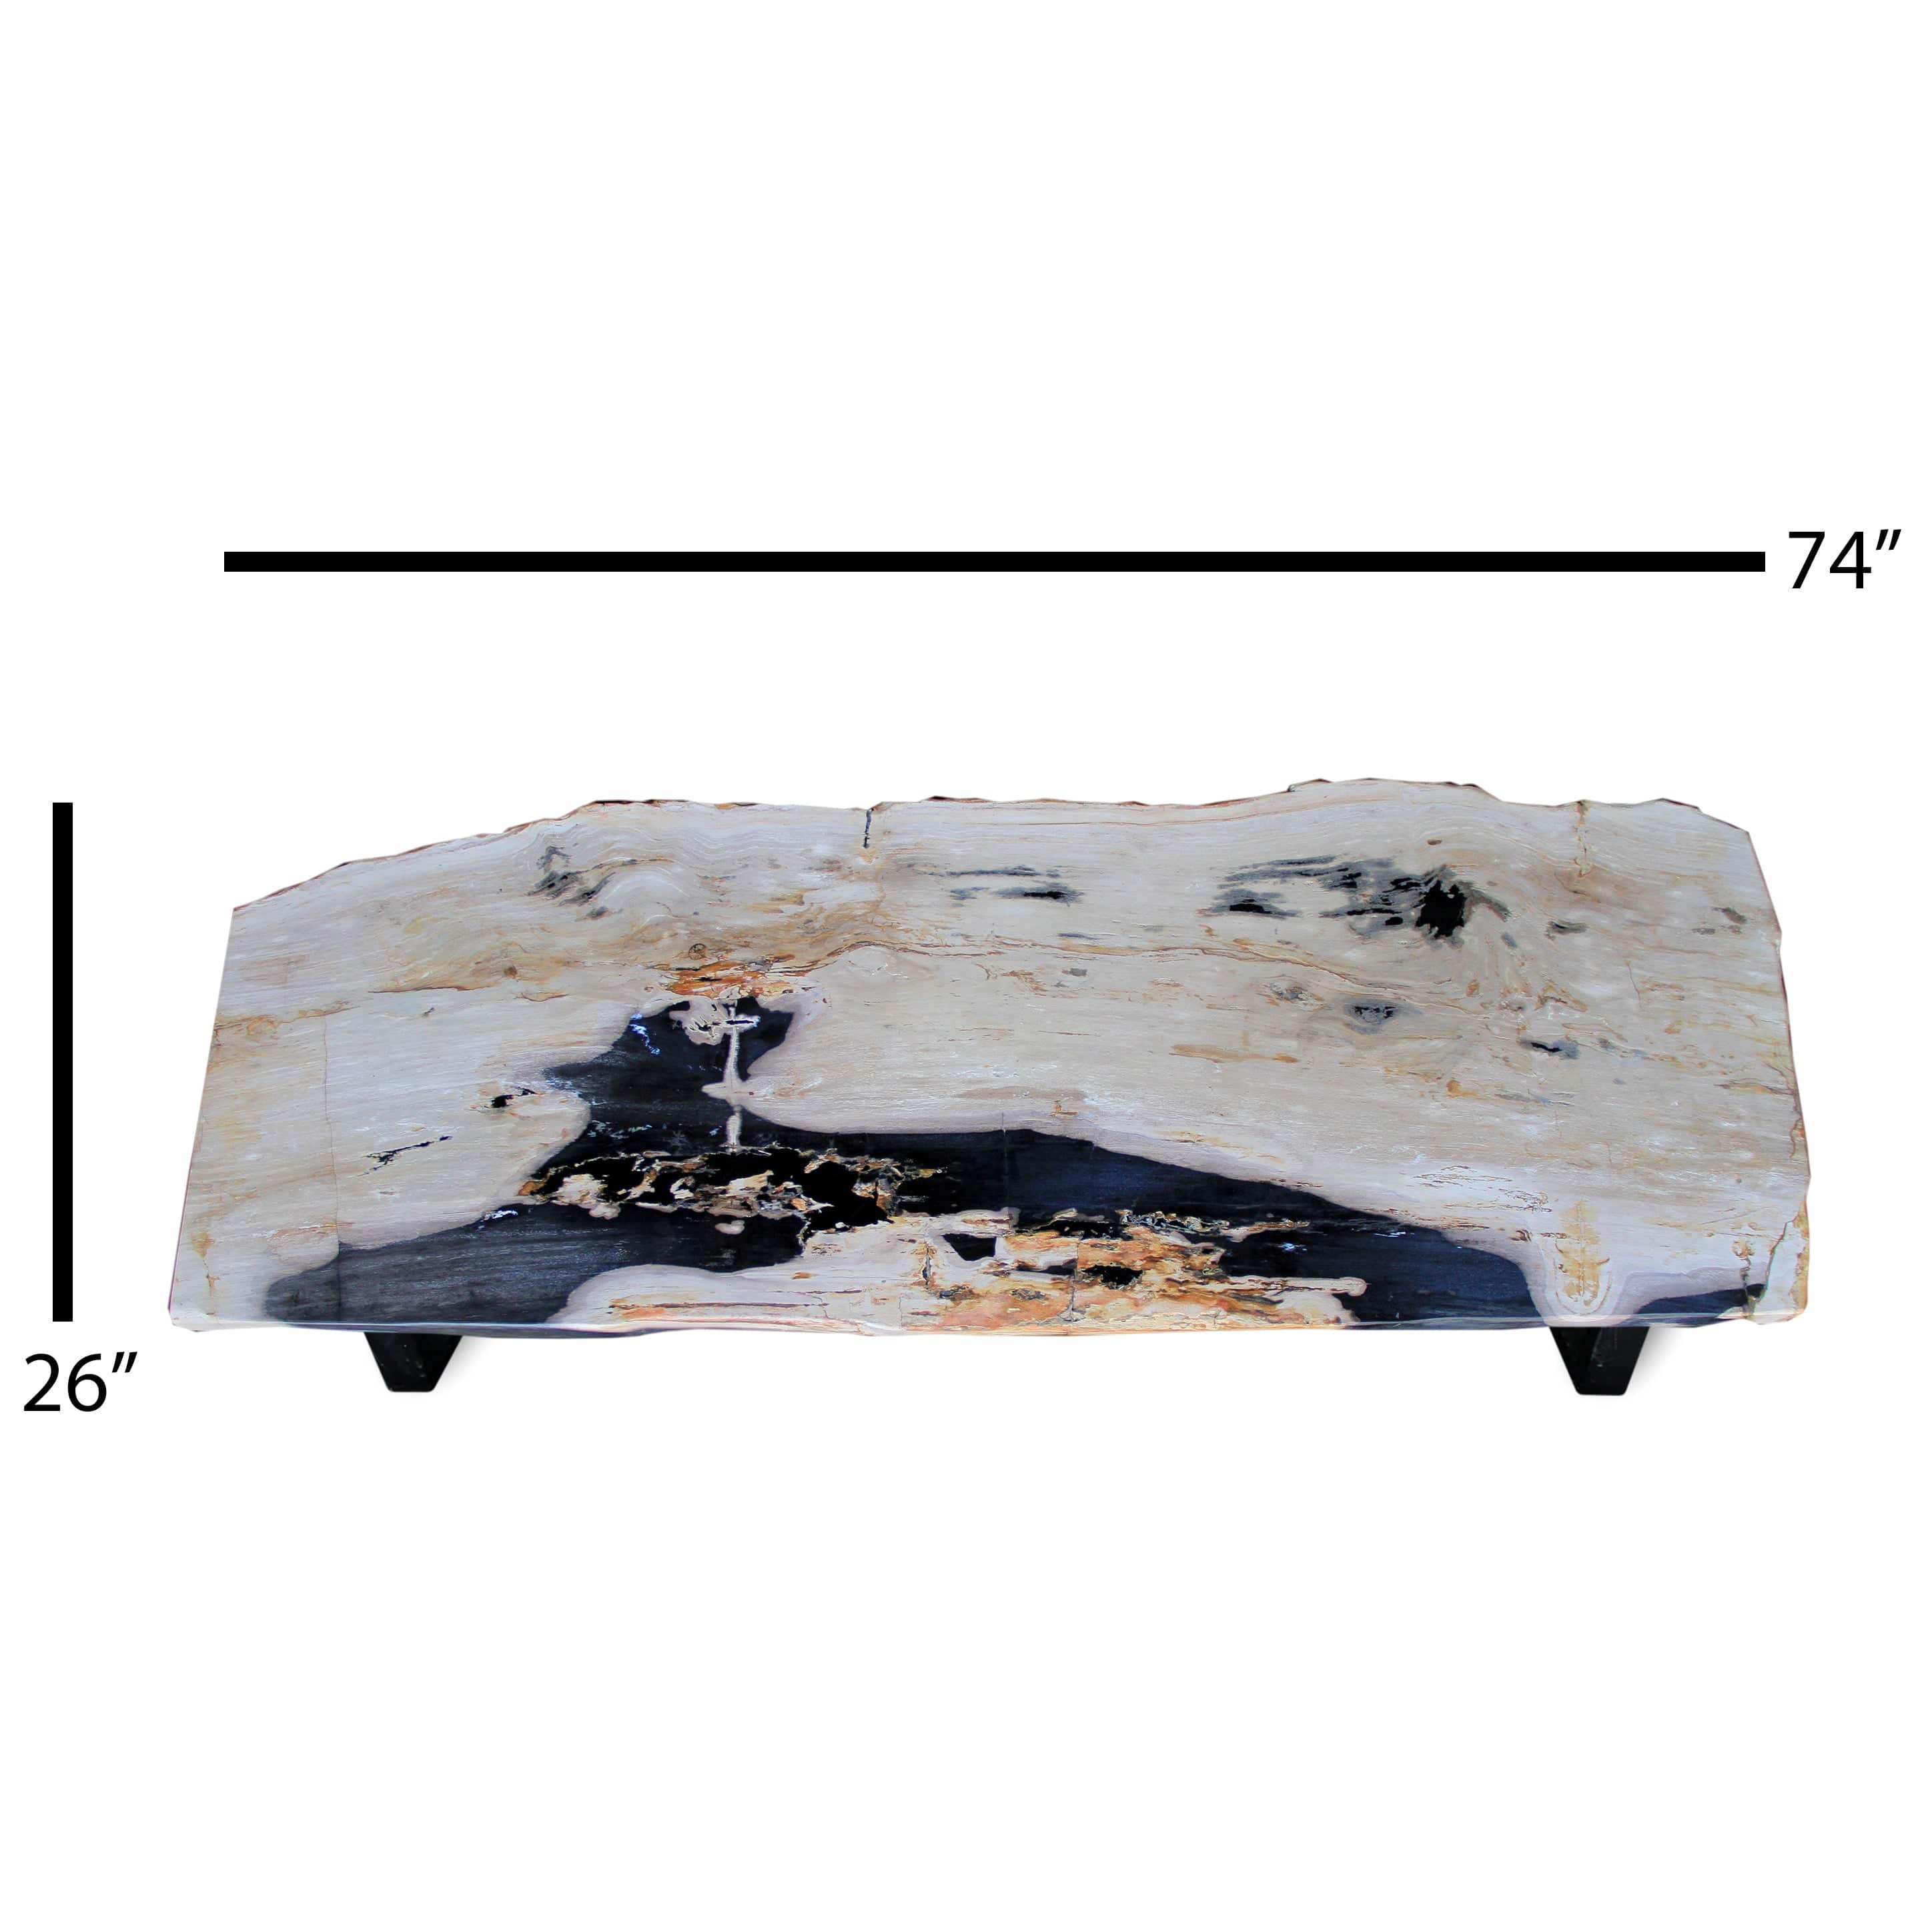 Kalifano Petrified Wood Polished Petrified Wood Table from Indonesia - 74" / 293 lbs PWR10640.001